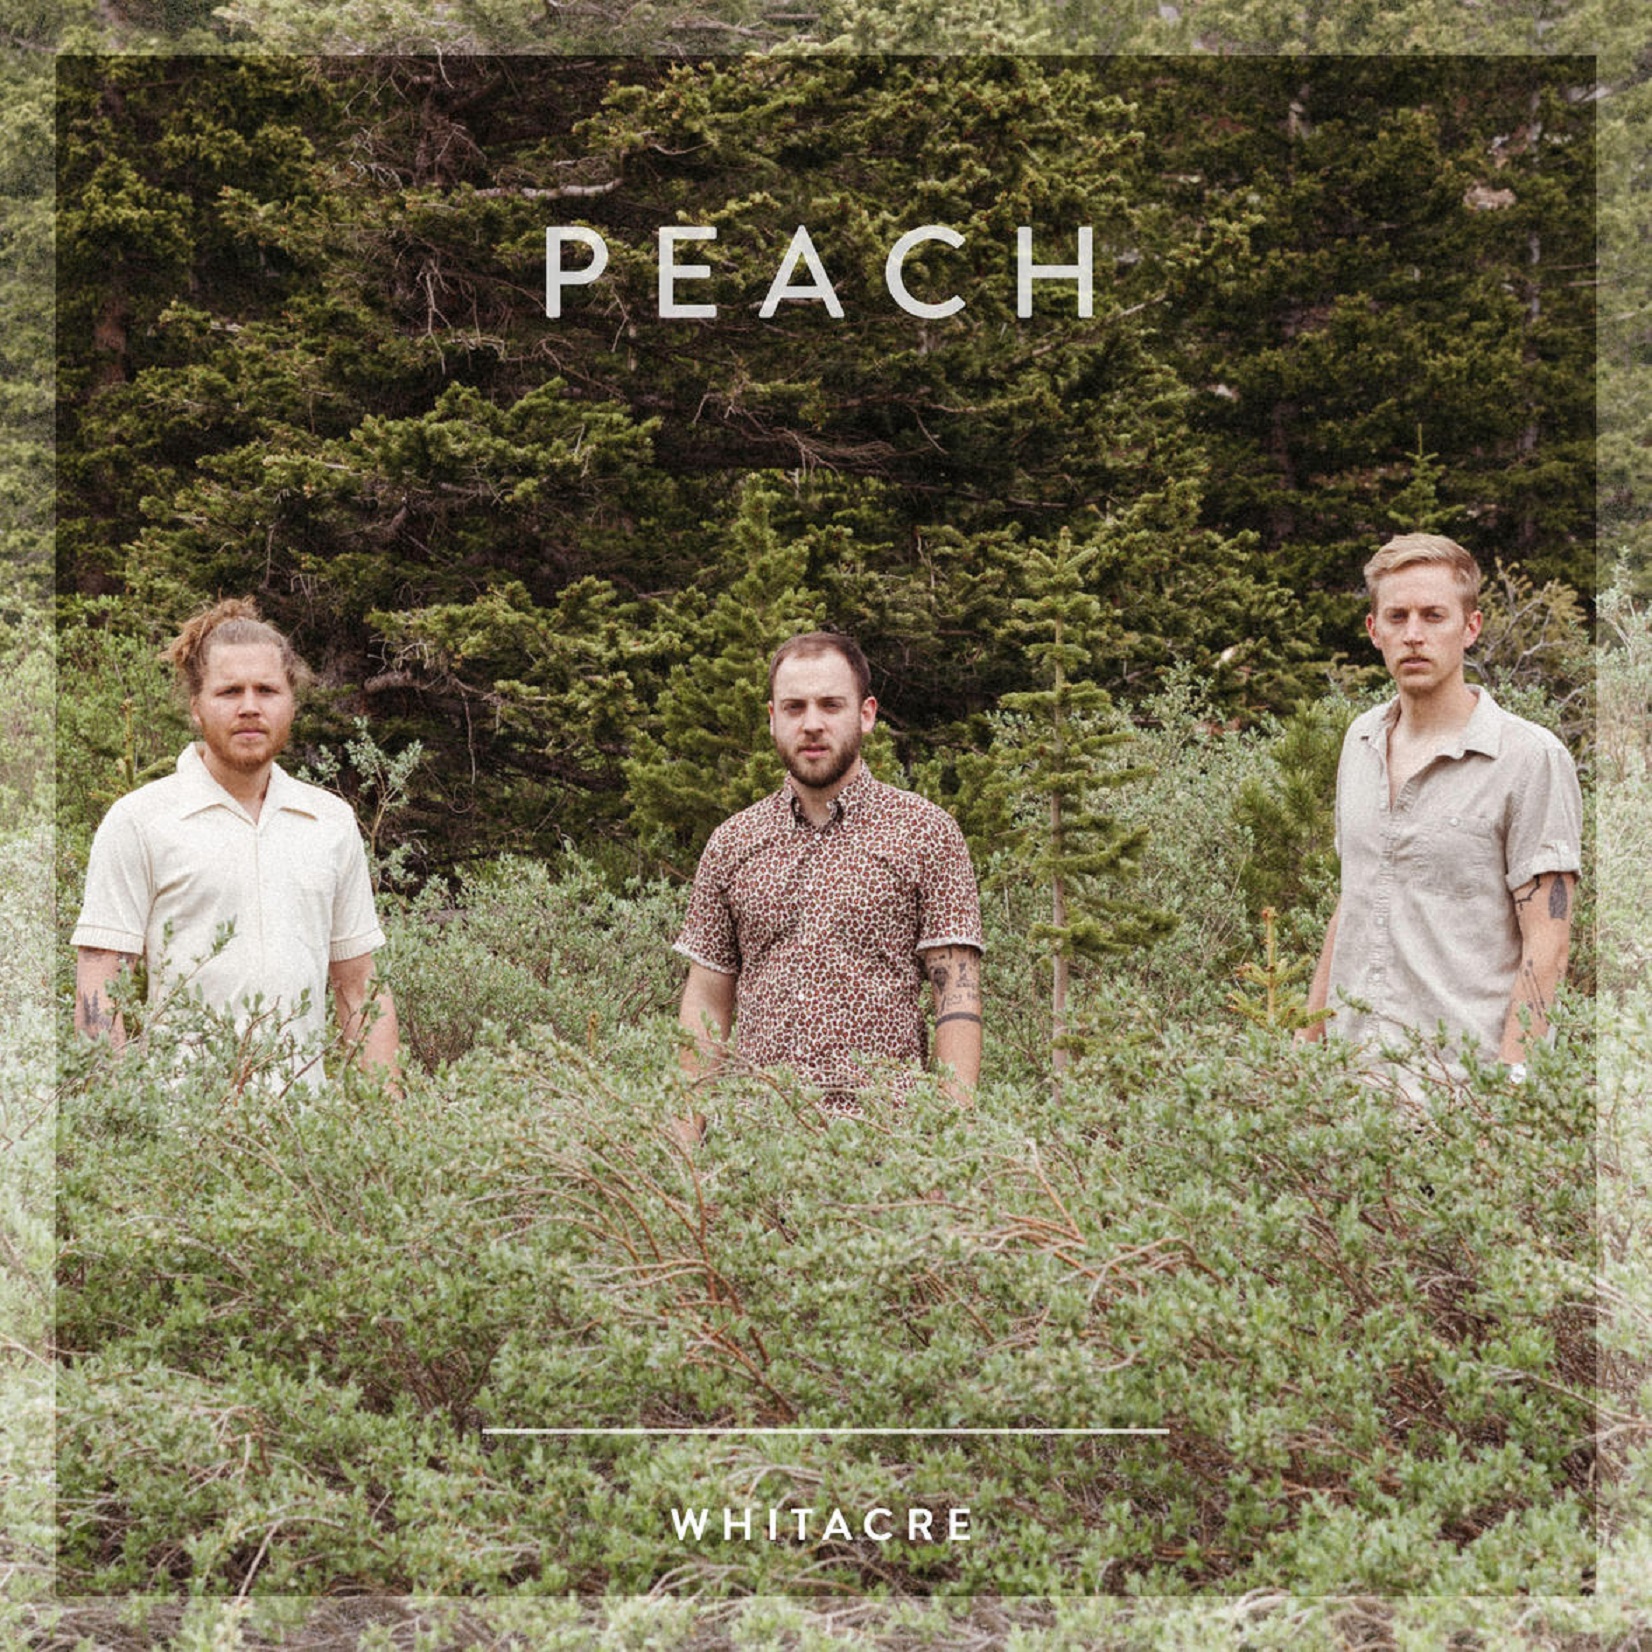 Alt-Americana band, Whitacre, to release new single, “Peach,” tomorrow, 11/15